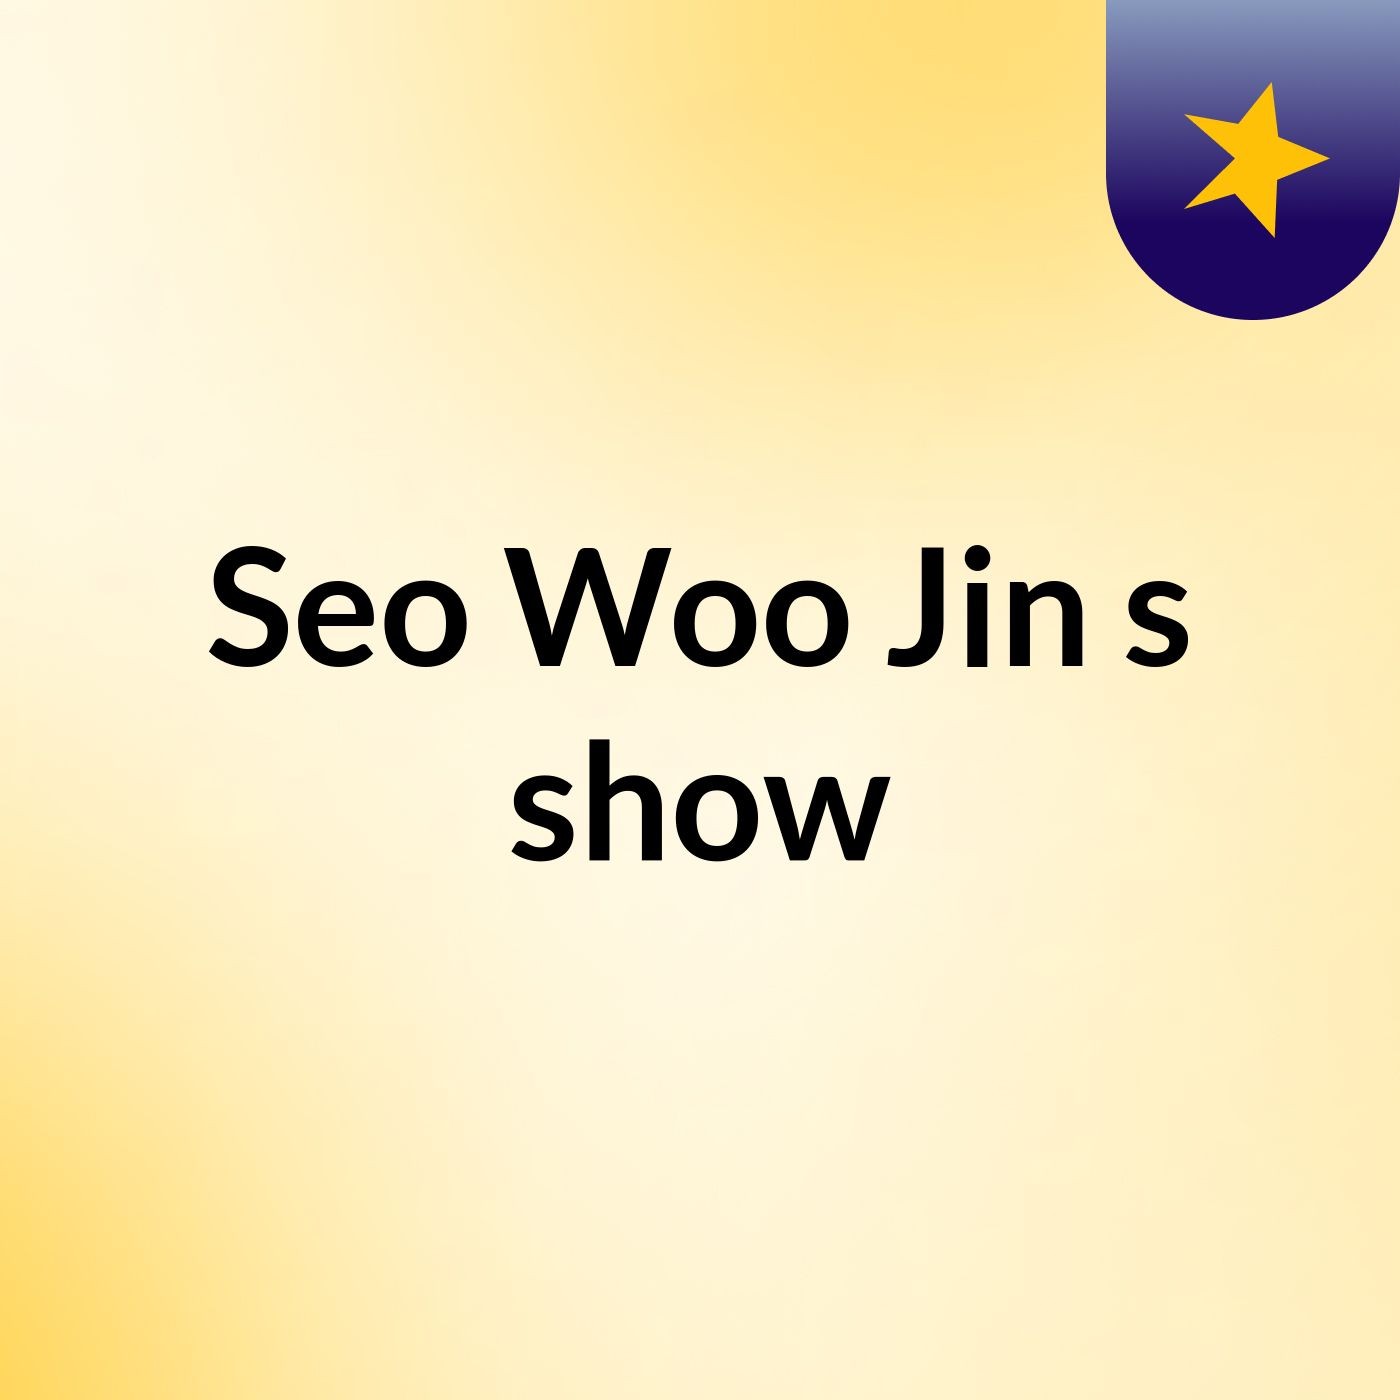 Seo Woo Jin's show